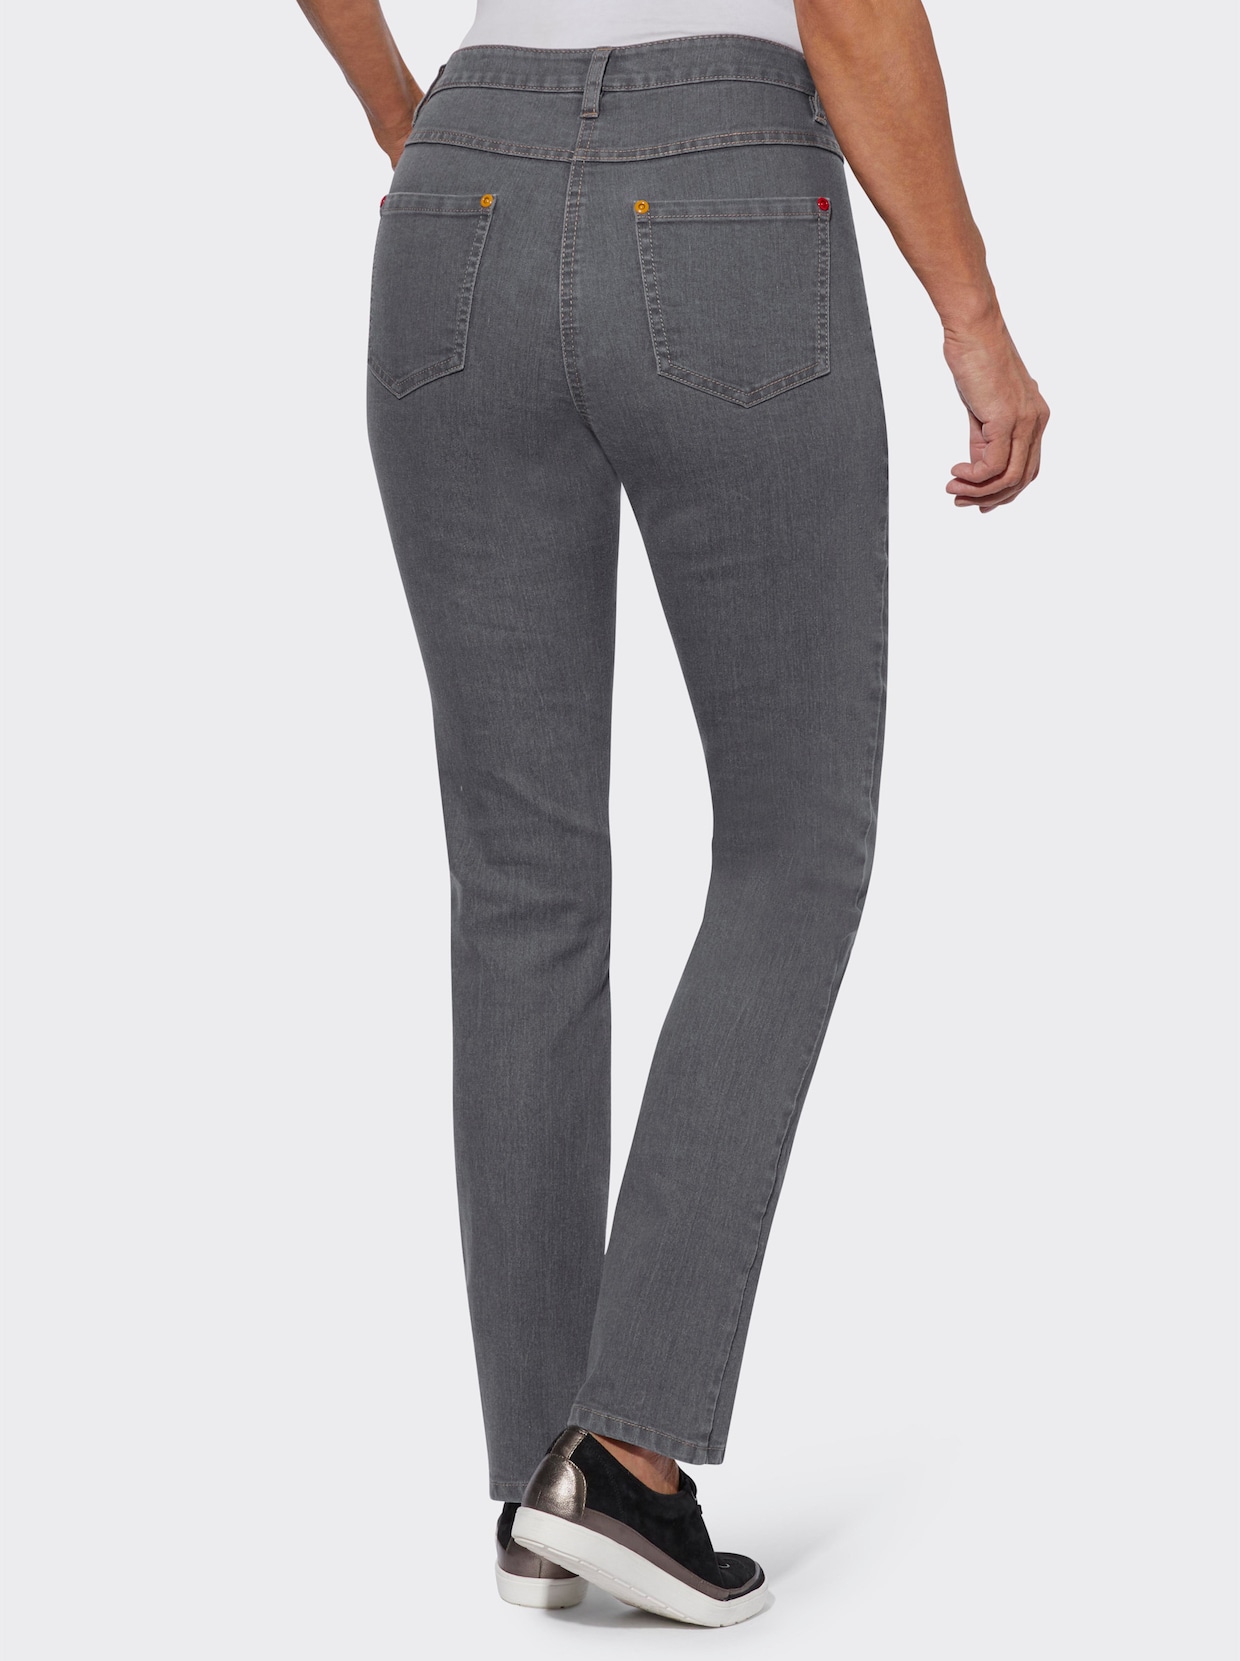 5-ficks jeans - grey denim